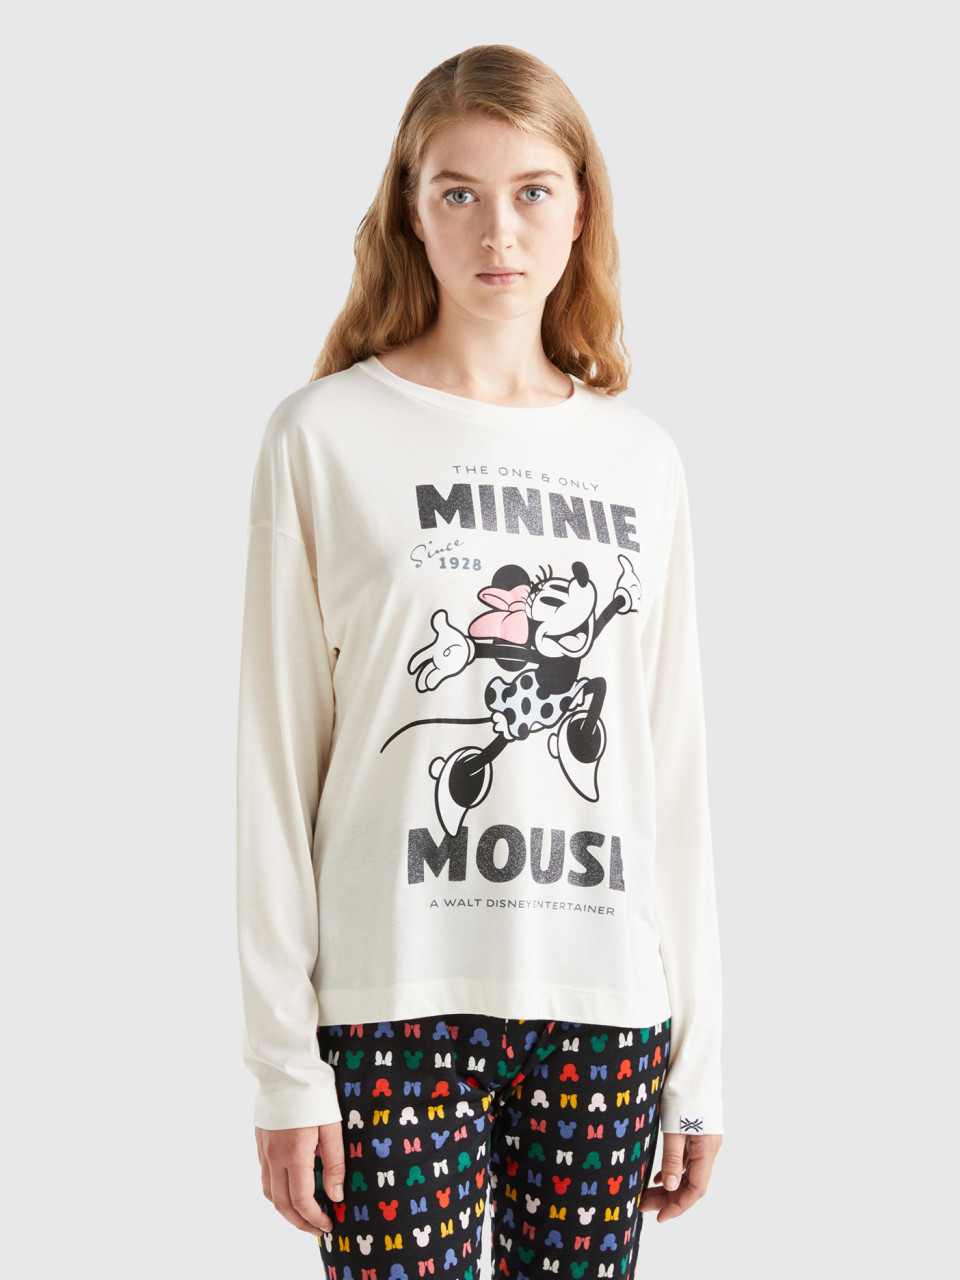 Benetton, Minnie Mouse Sweater In Cotton Blend, Creamy White, Women